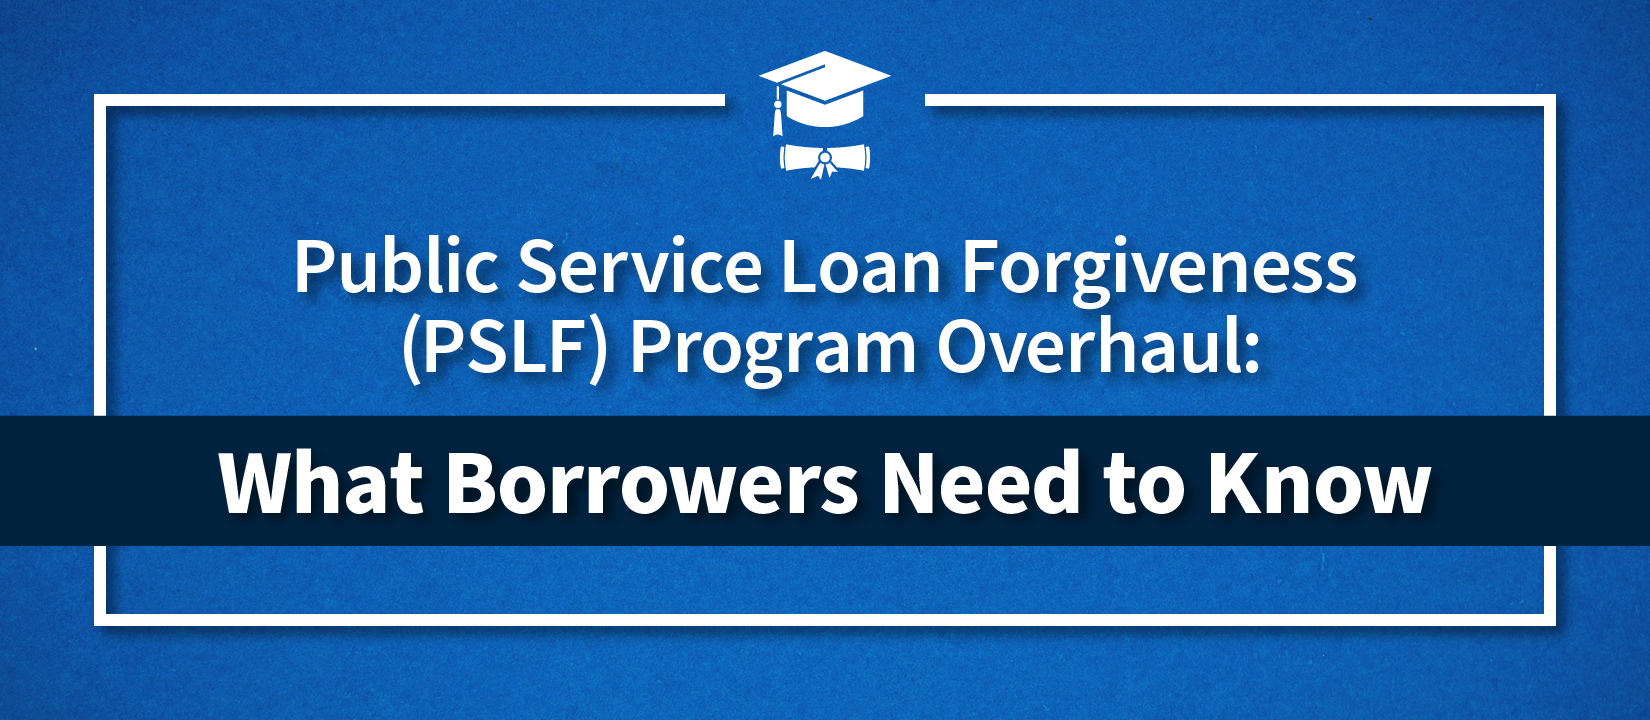 Public Service Loan Forgiveness (PSLF) Program Overhaul
What Borrowers Need to Know